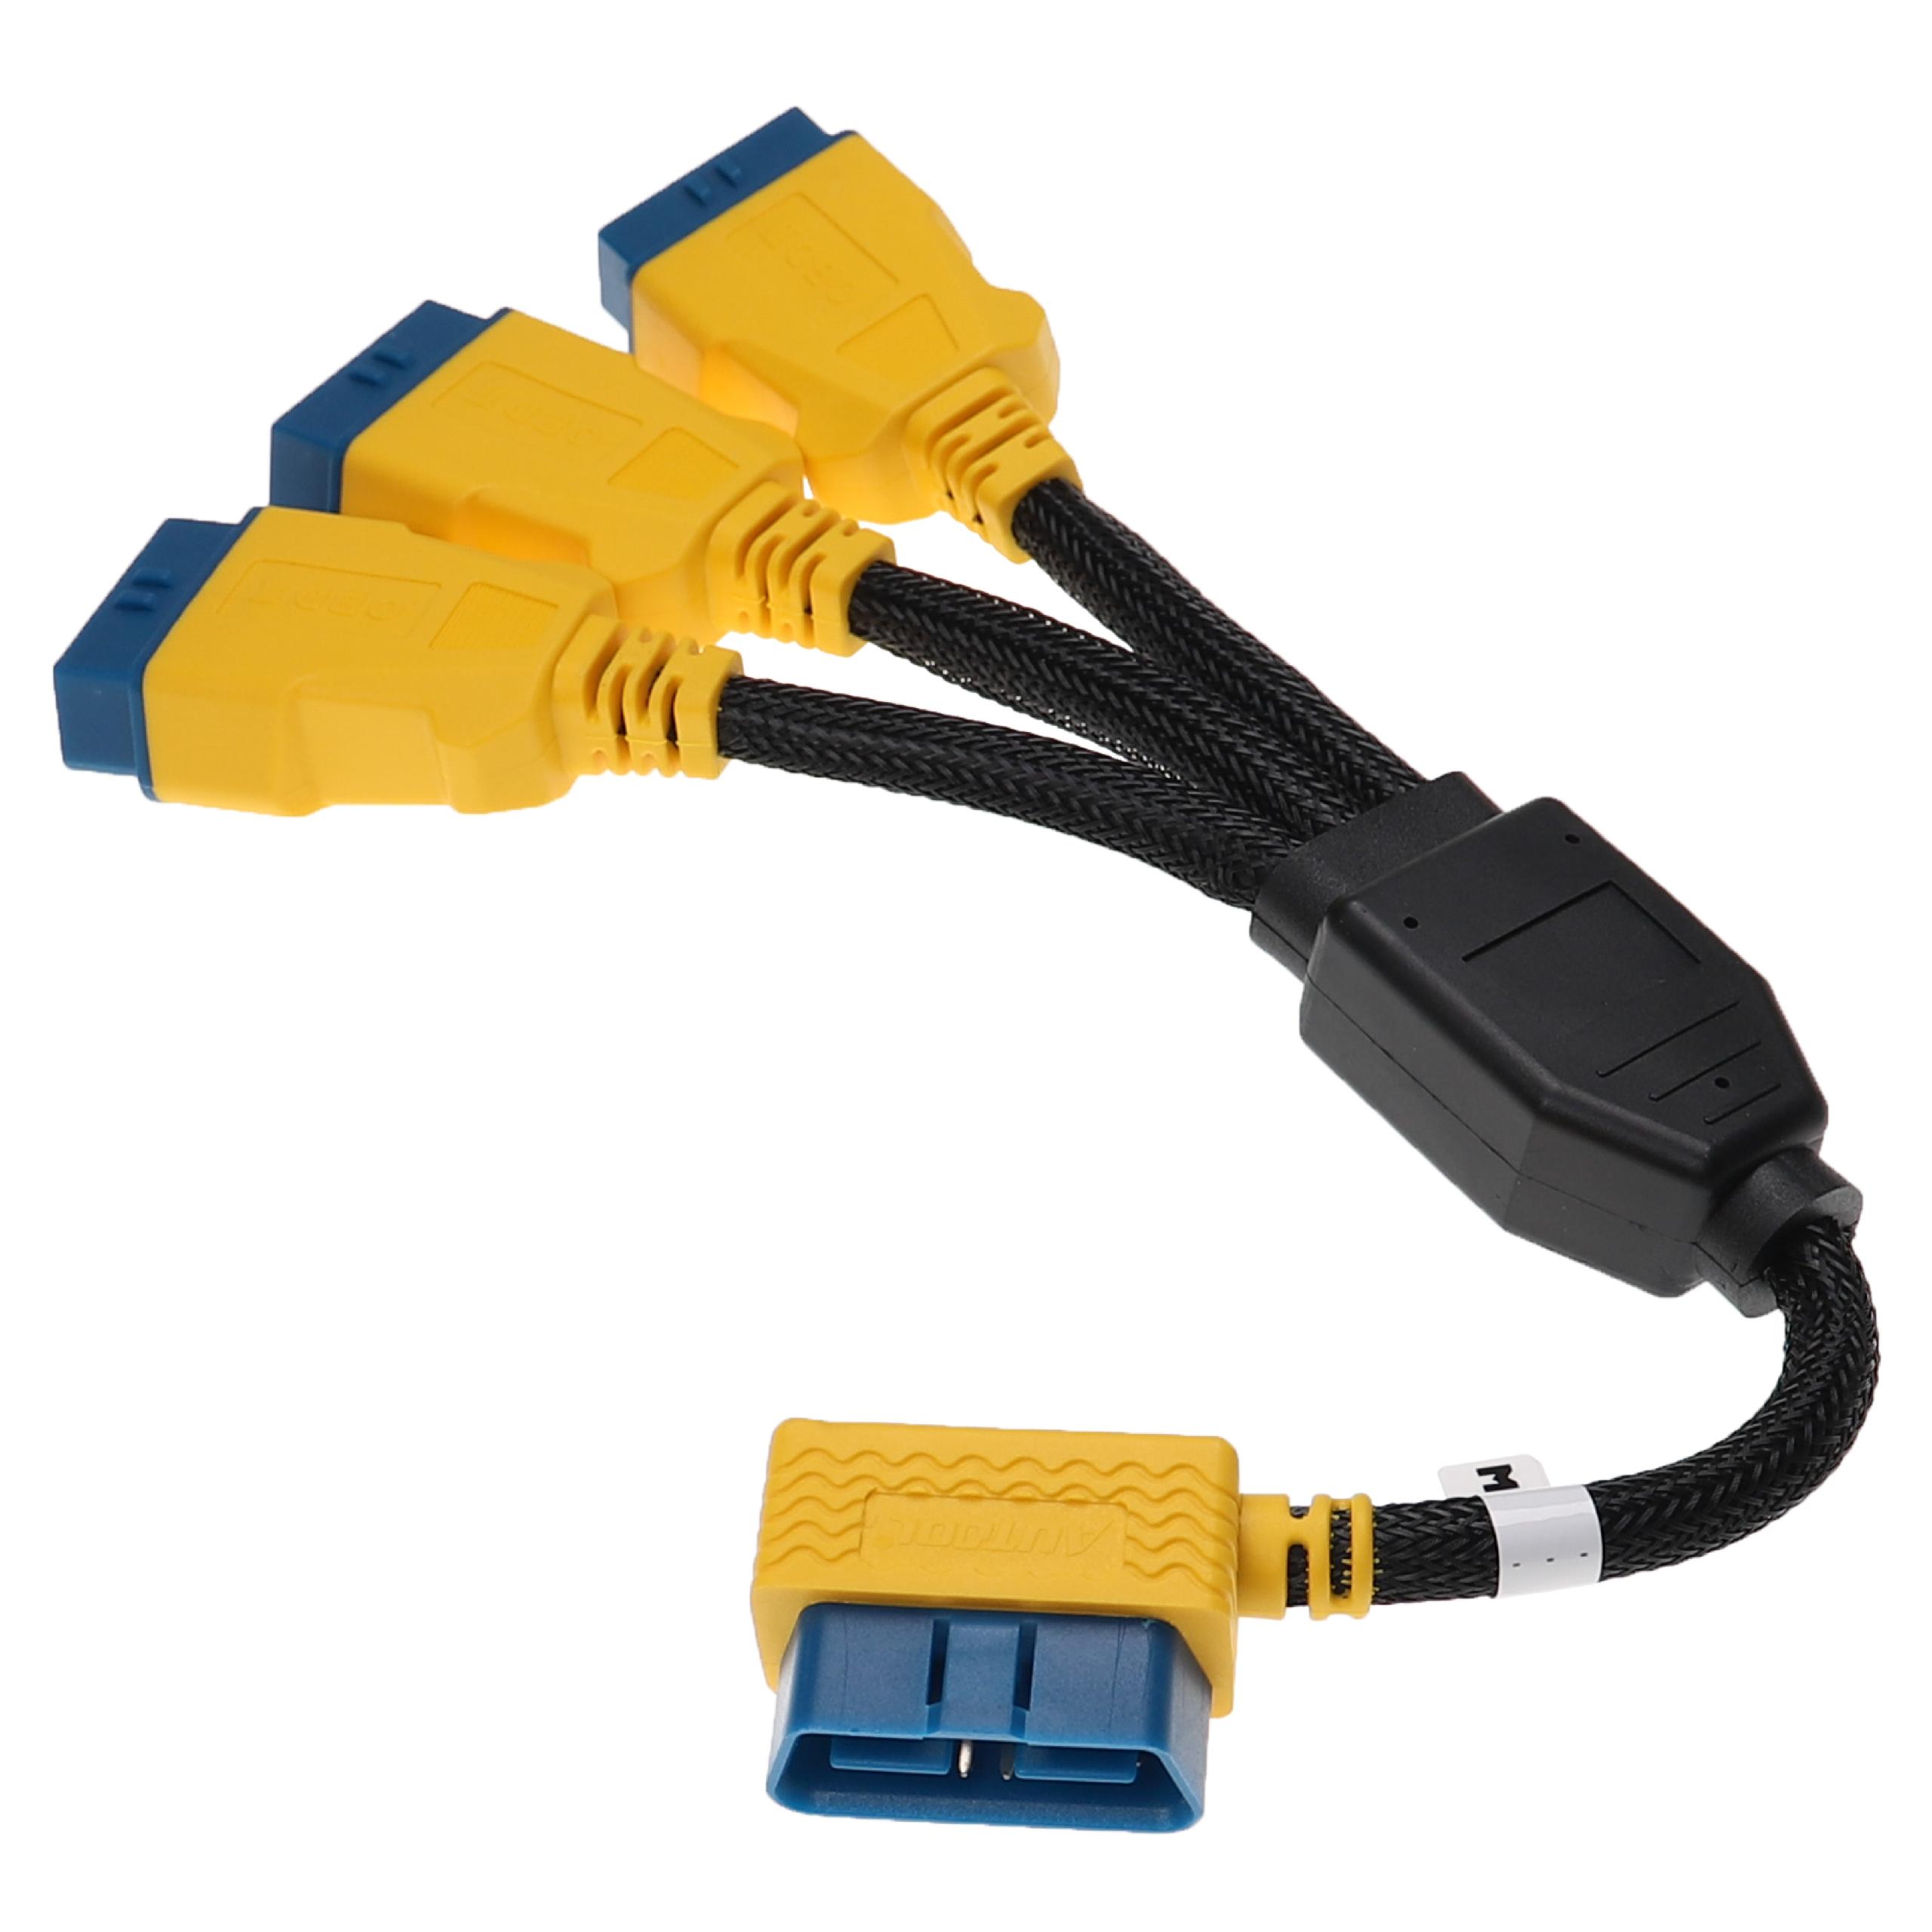 vhbw OBD2 Adapter 1x OBD2 plug to 3x OBD2 socket for LKW, Car, Vehicle - 35 cm